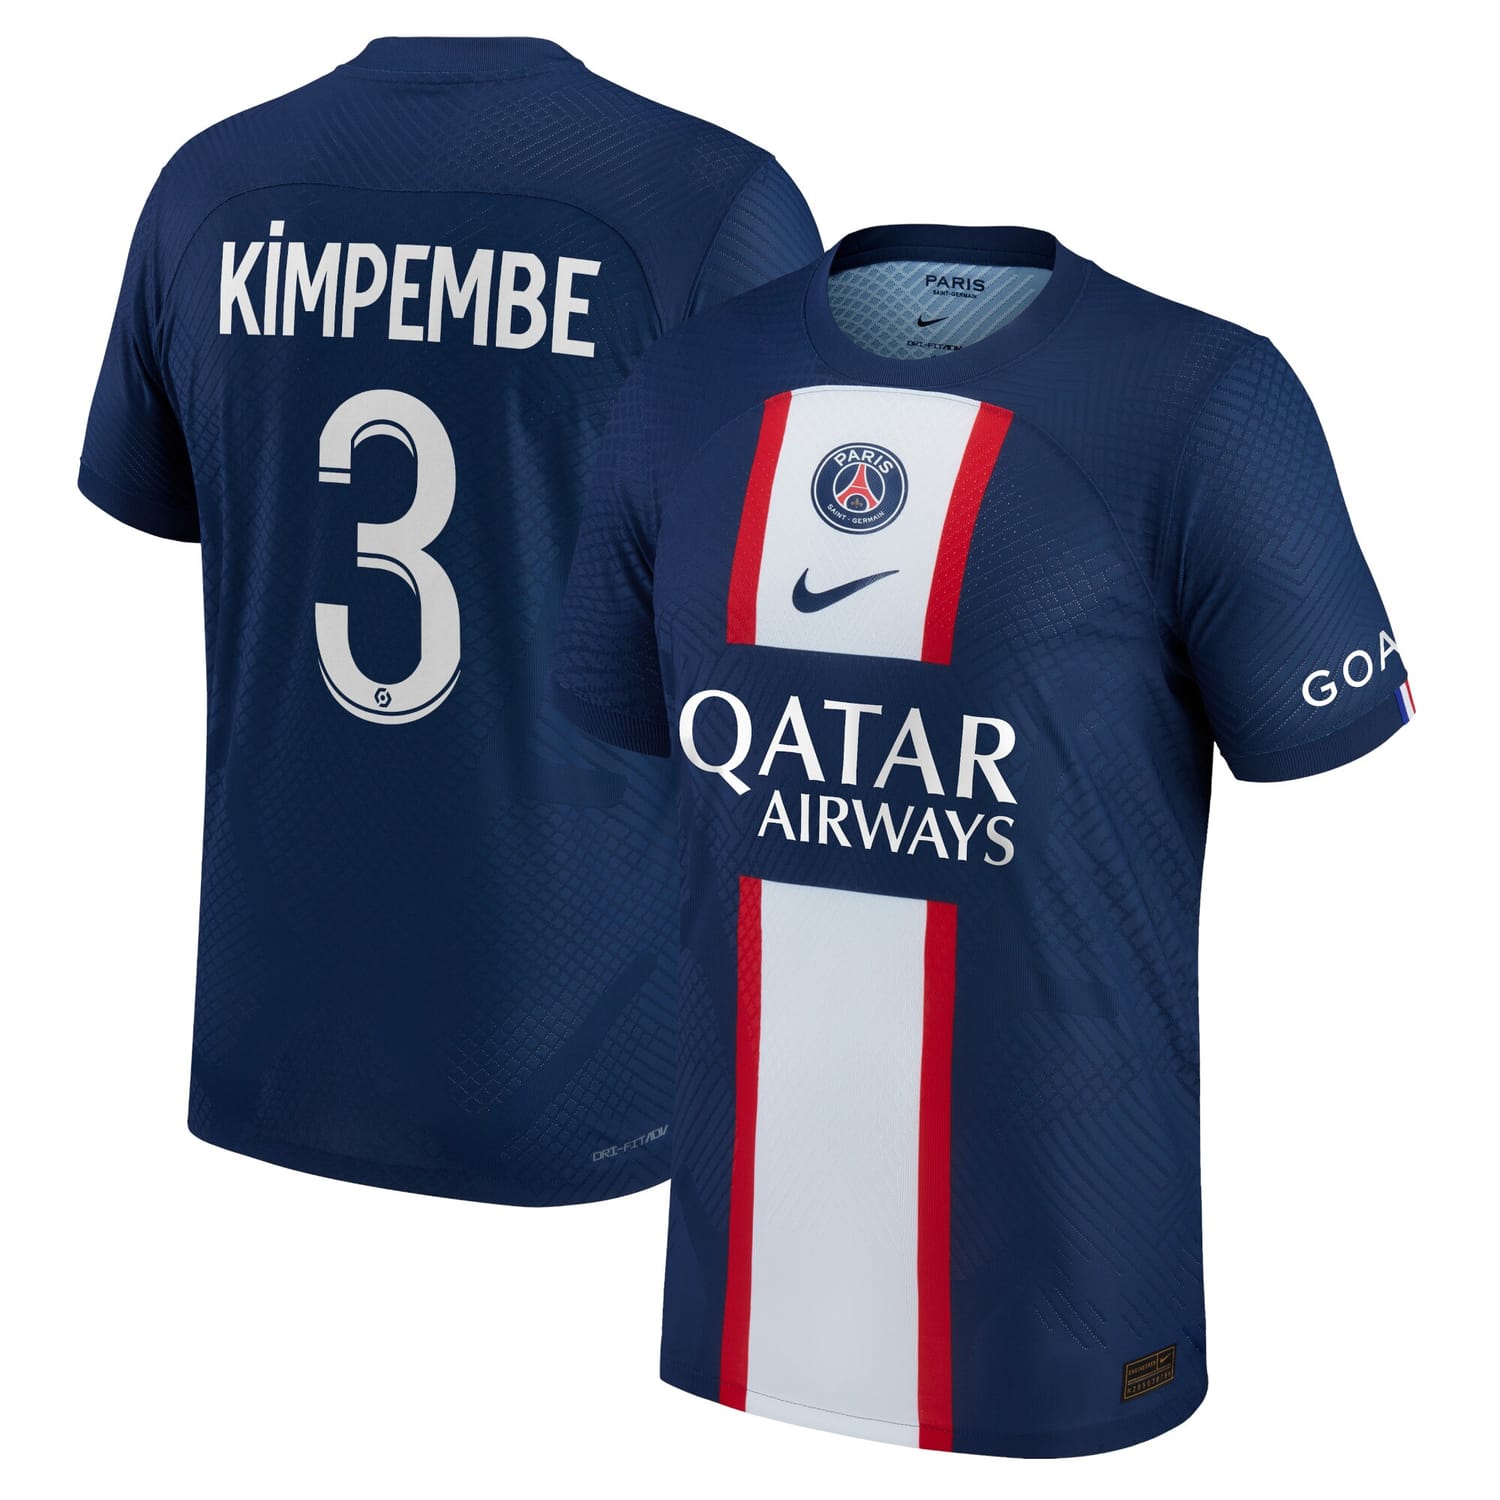 Ligue 1 Paris Saint-Germain Home Authentic Jersey Shirt 2022-23 player Presnel Kimpembe 3 printing for Men